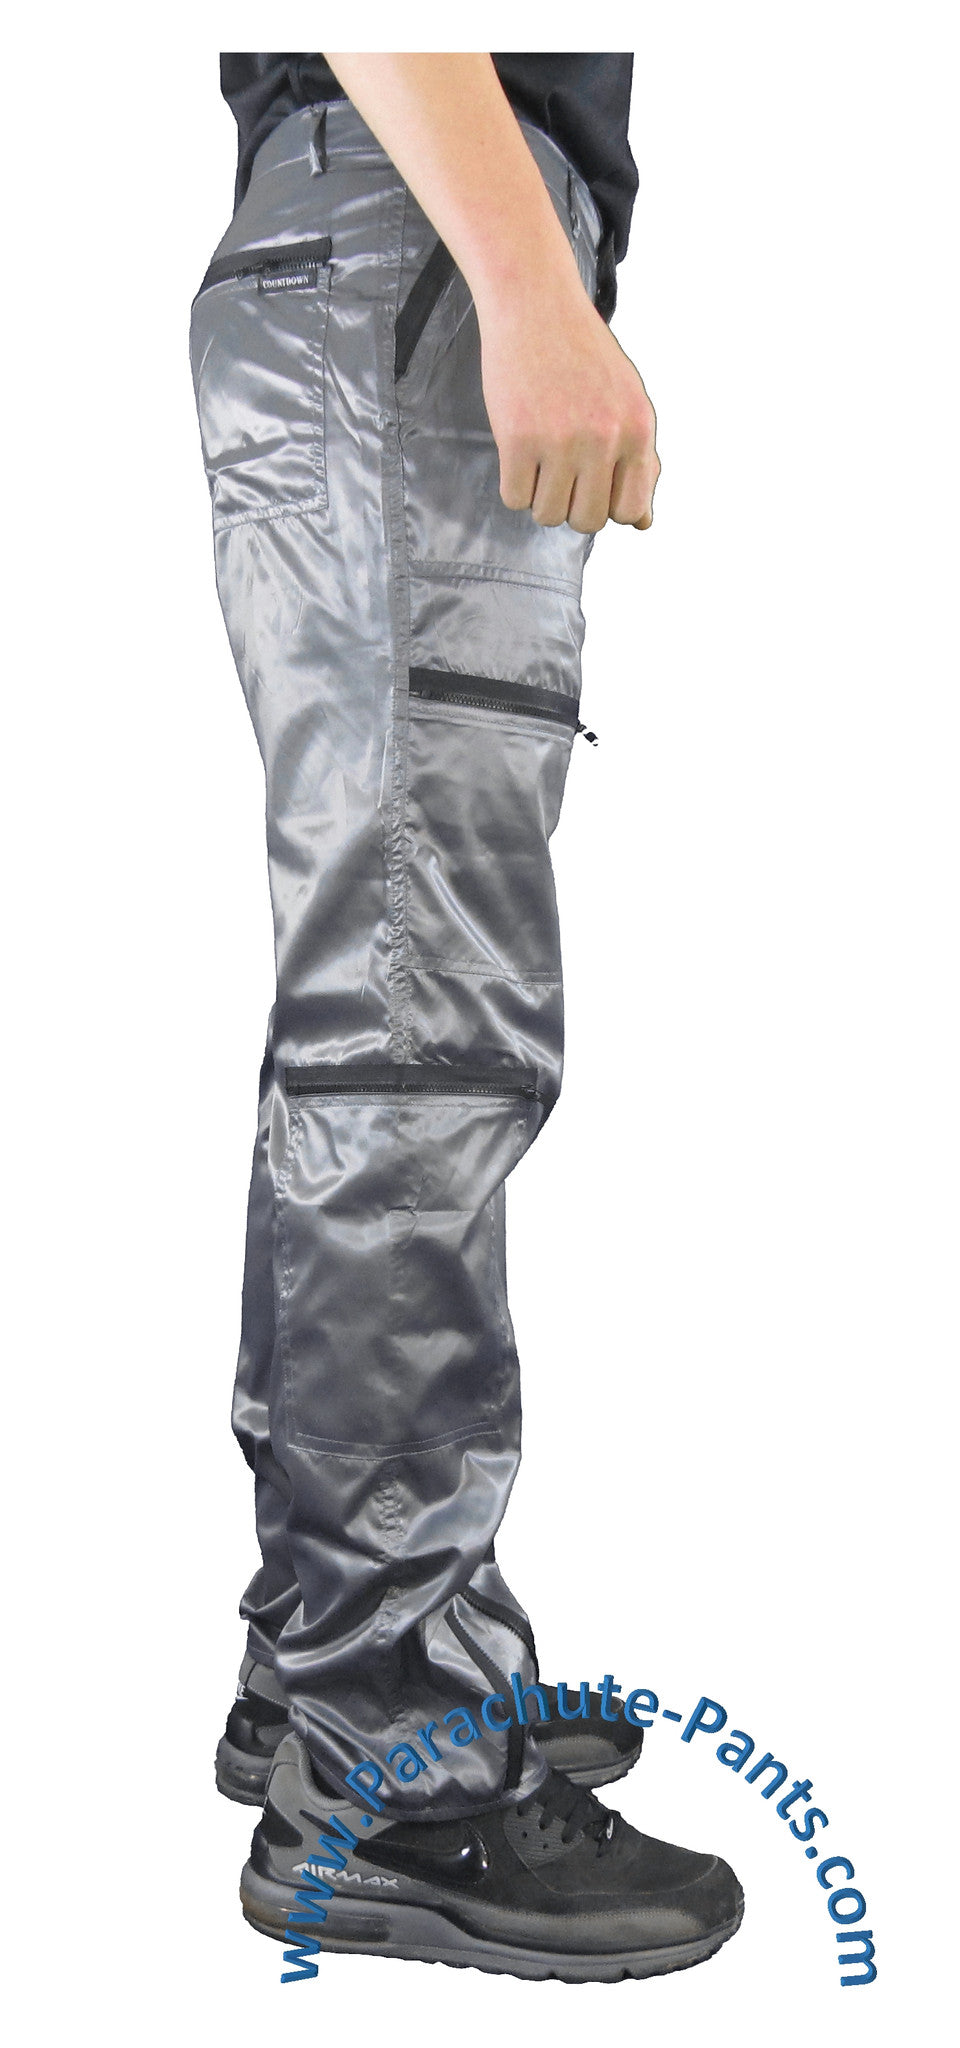 Countdown Grey Shiny Nylon Parachute Pants with Black Zippers | The ...